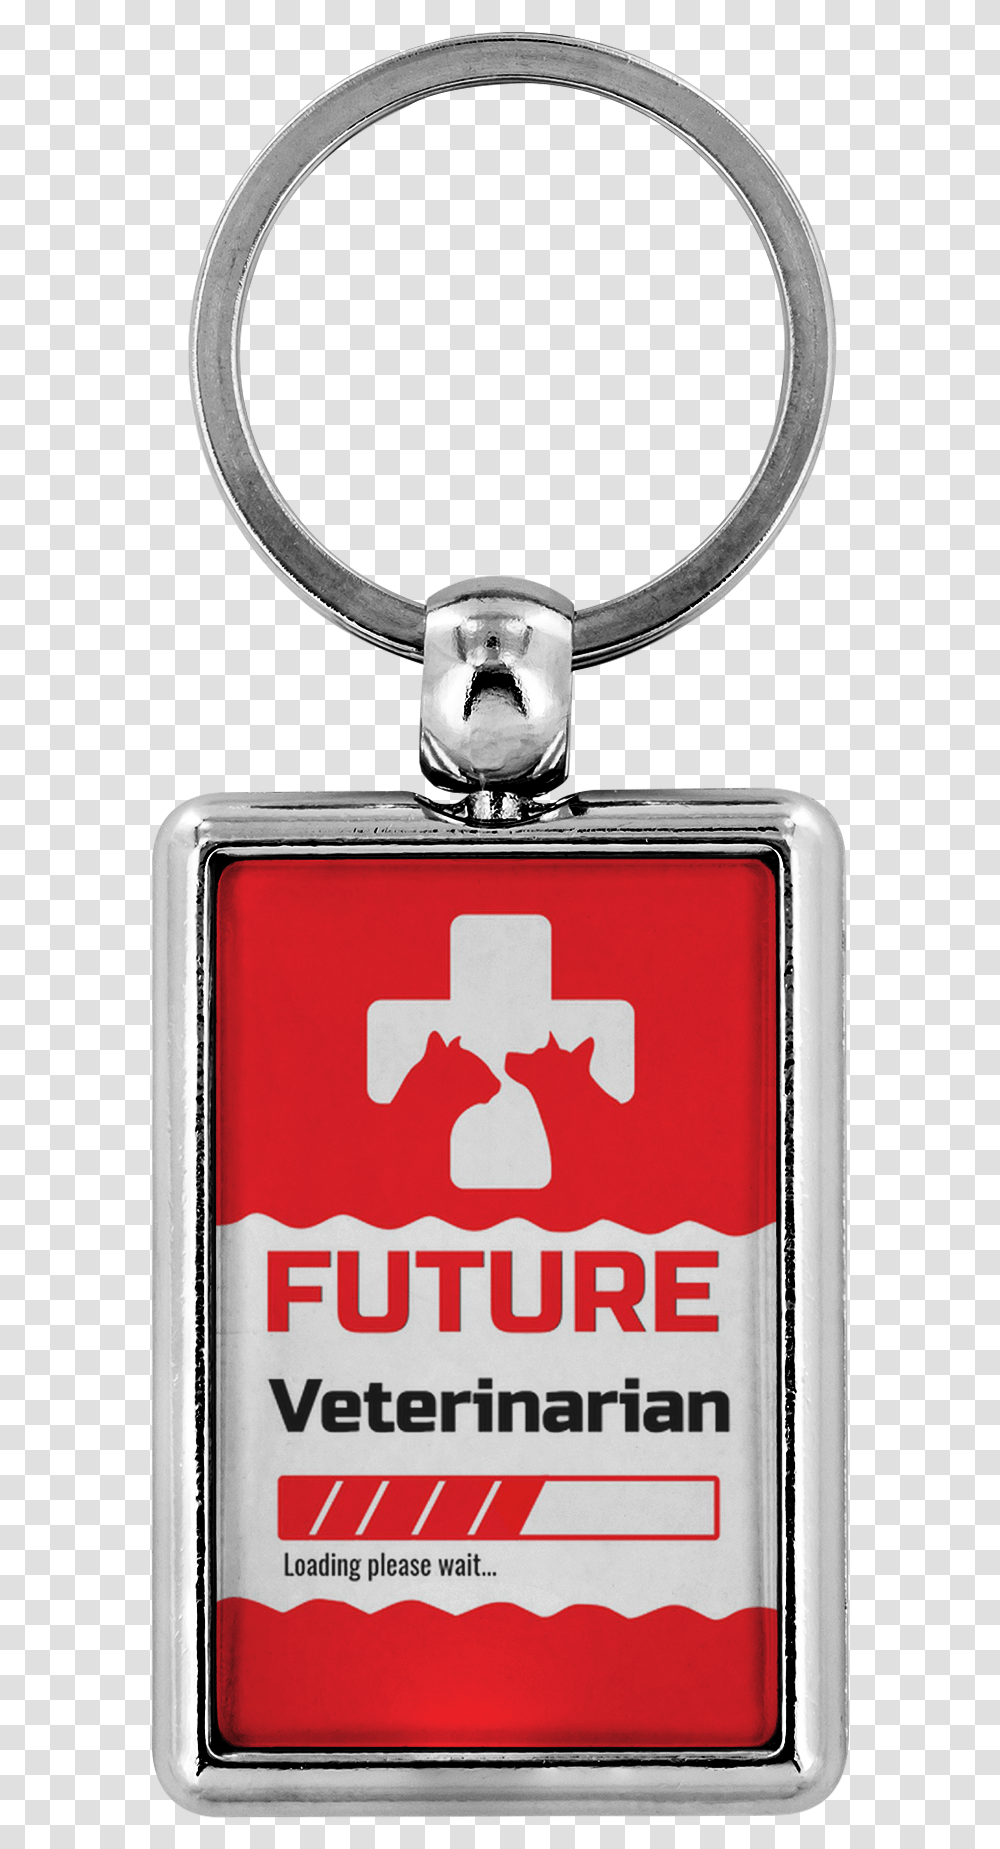 Funny Future Veterinarian Loading Please Wait Key Chain Keychain, Logo, Trademark, Bottle Transparent Png